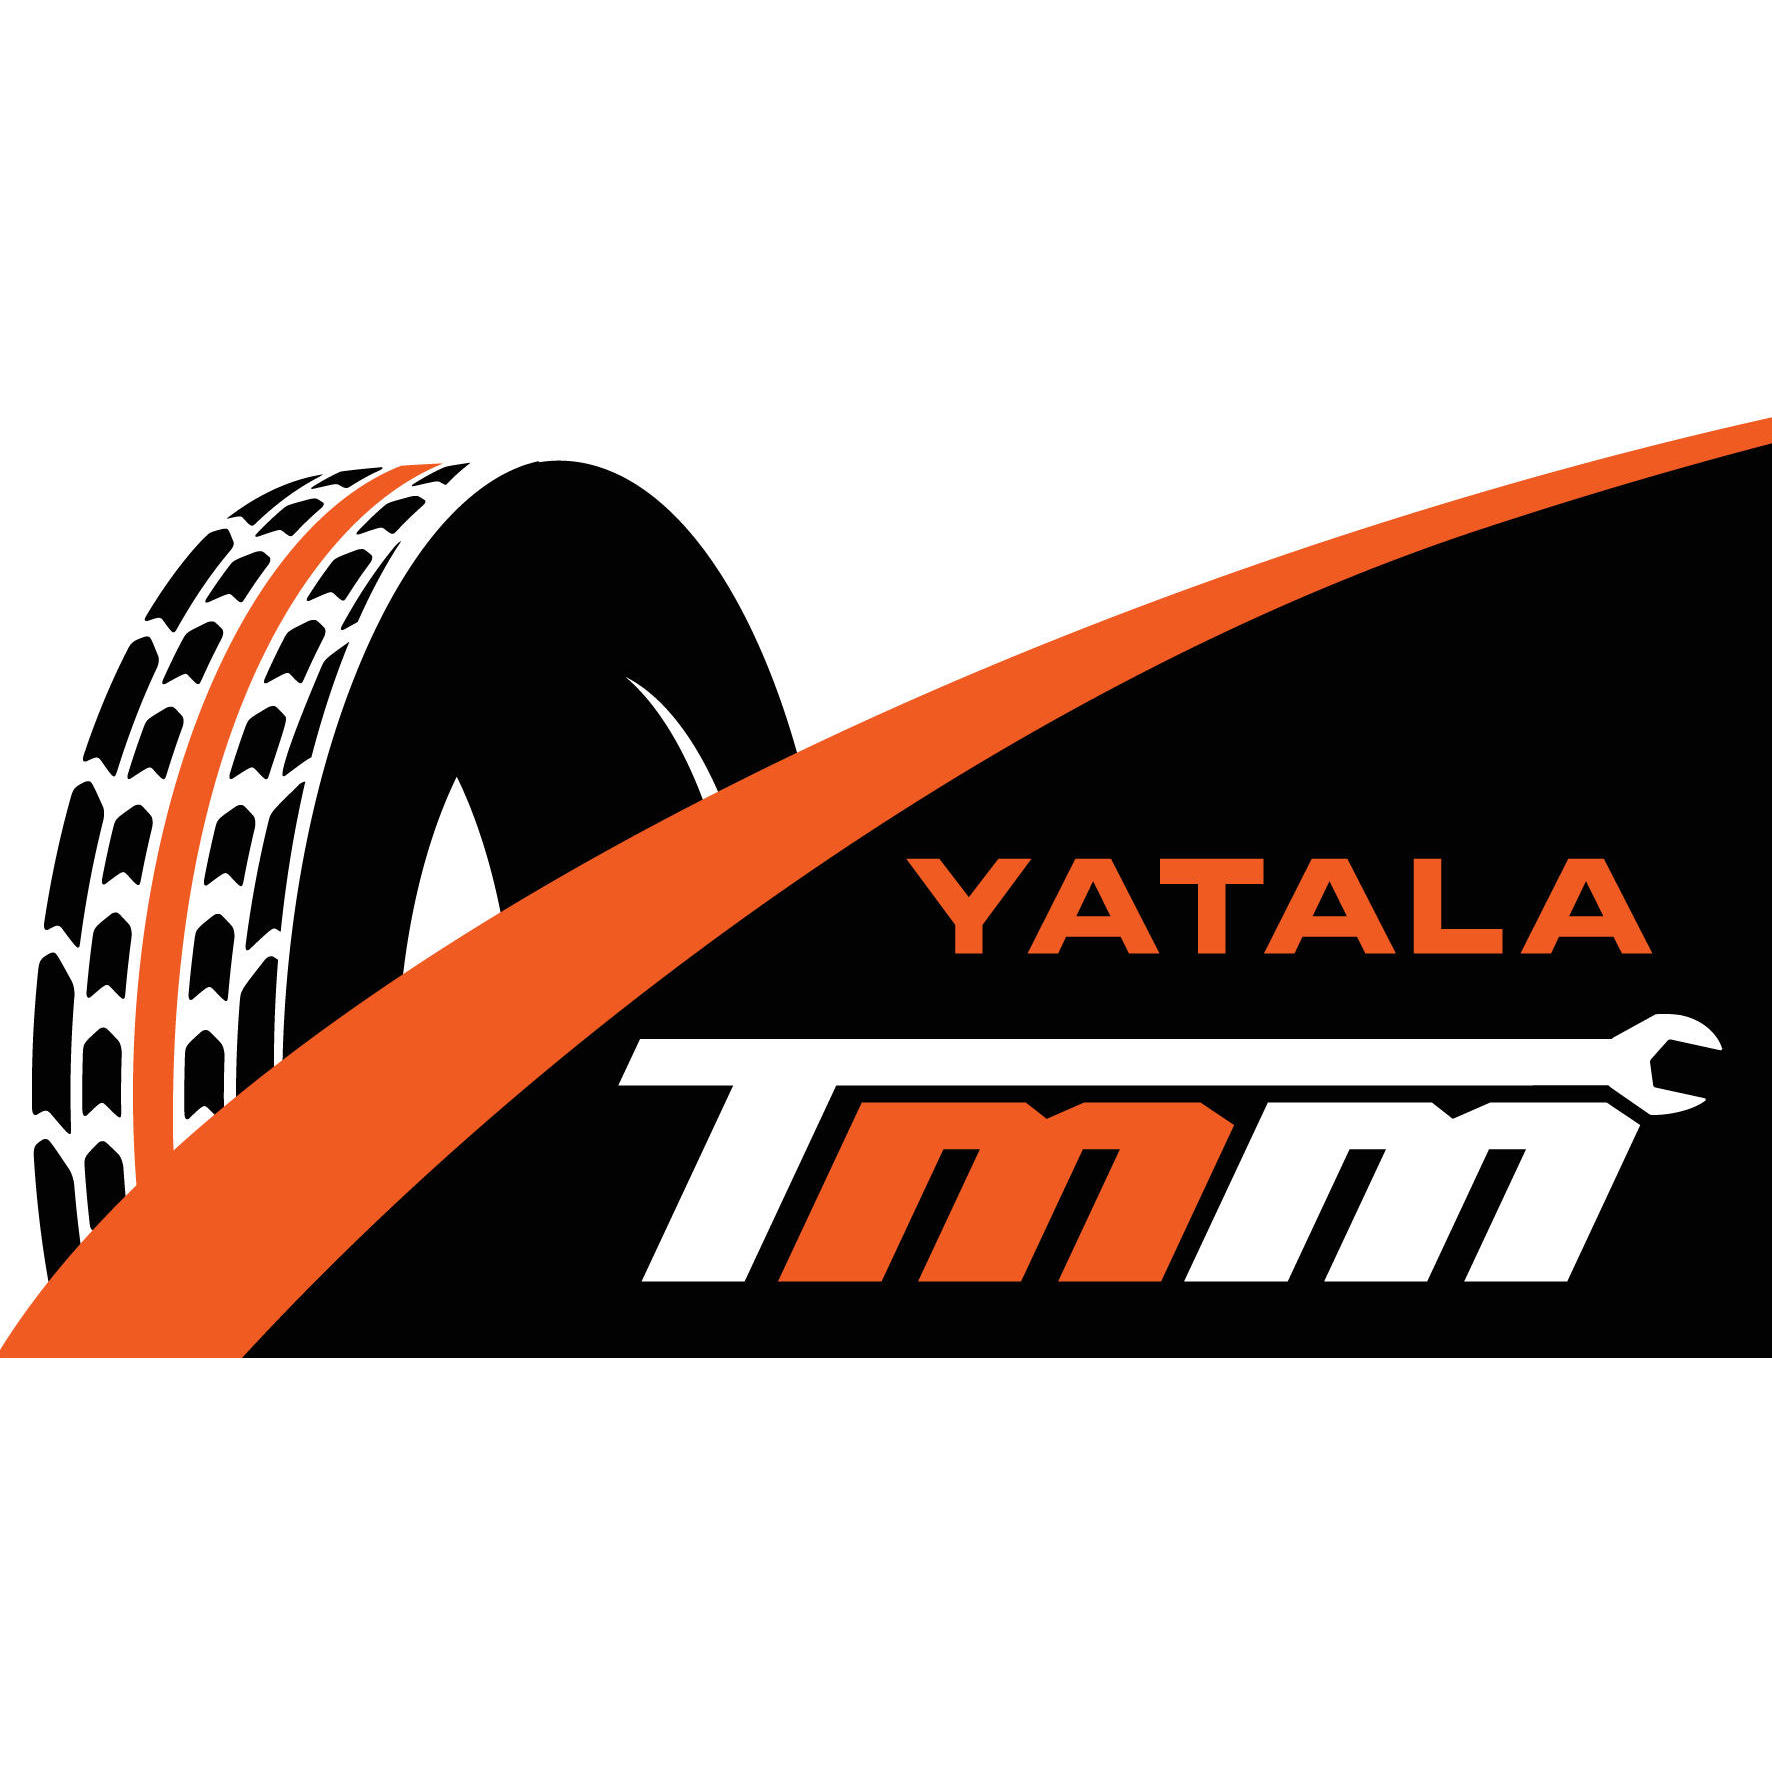 Yatala Tyres Mufflers and Mechanical - Stapylton, QLD 4207 - (07) 3807 8778 | ShowMeLocal.com